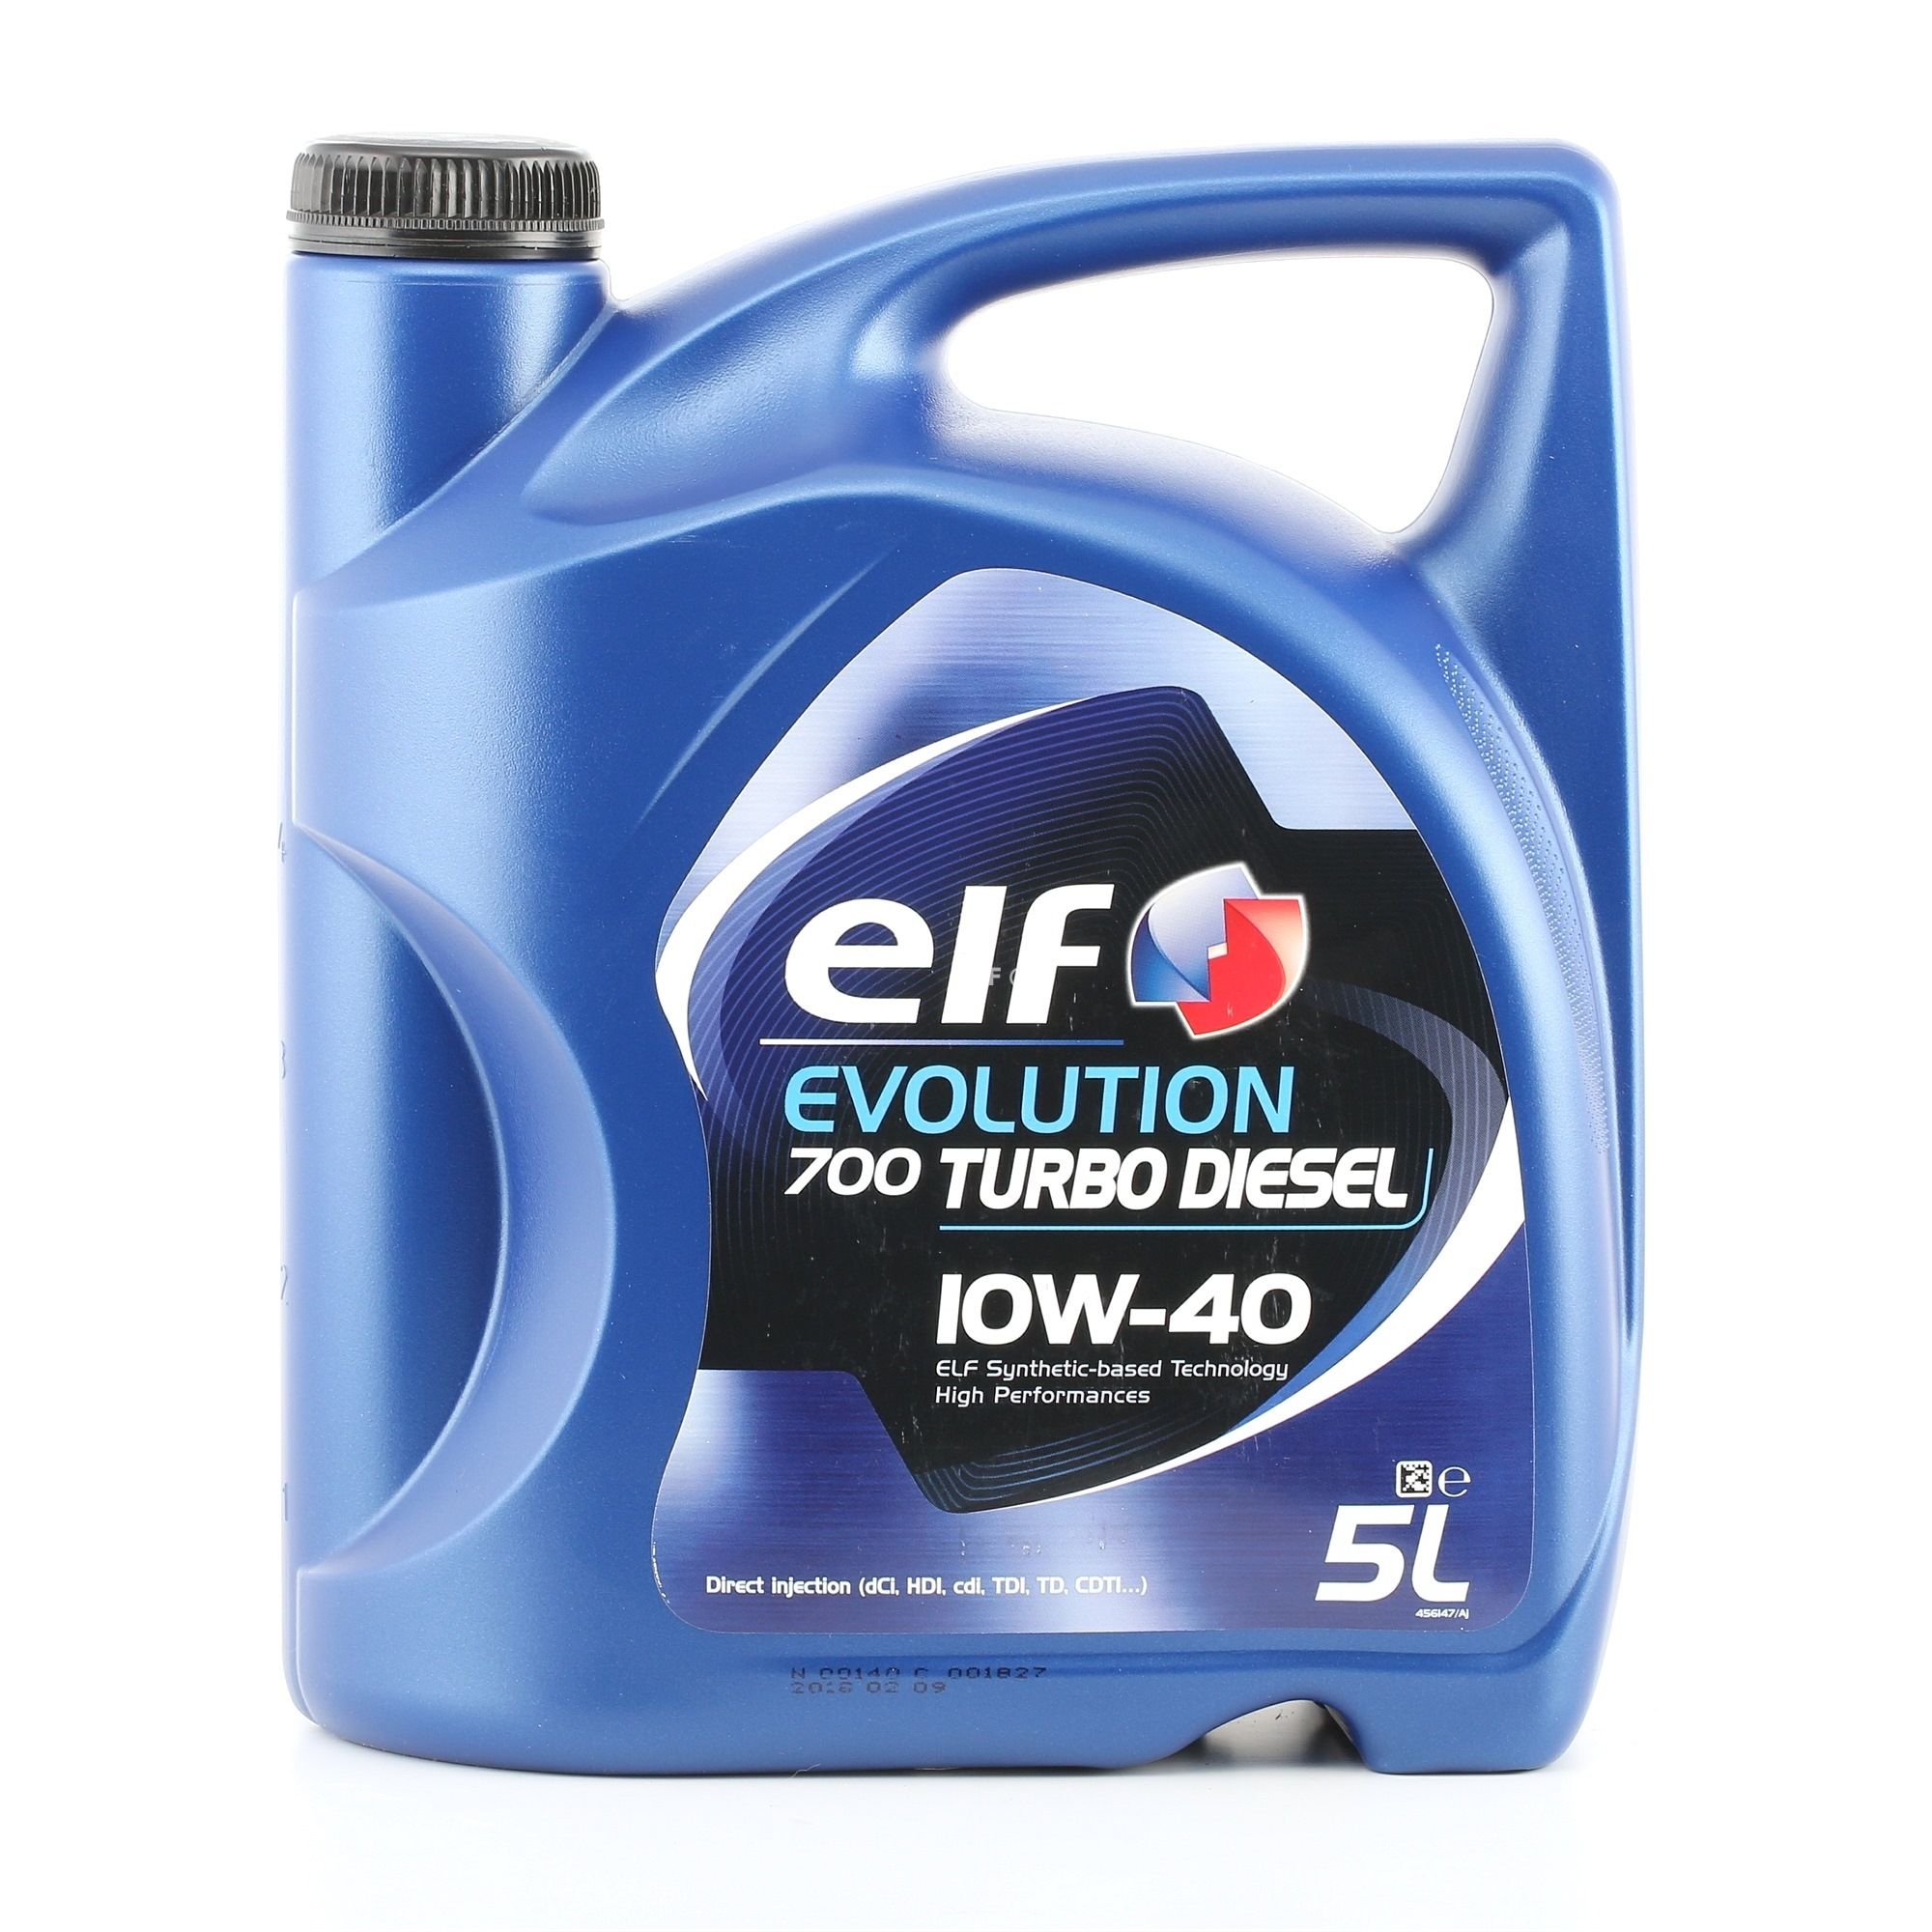 ELF Evolution, 700 Turbo Diesel 2204217 Motorolie 10W-40, 5L, Deels synthetische olie